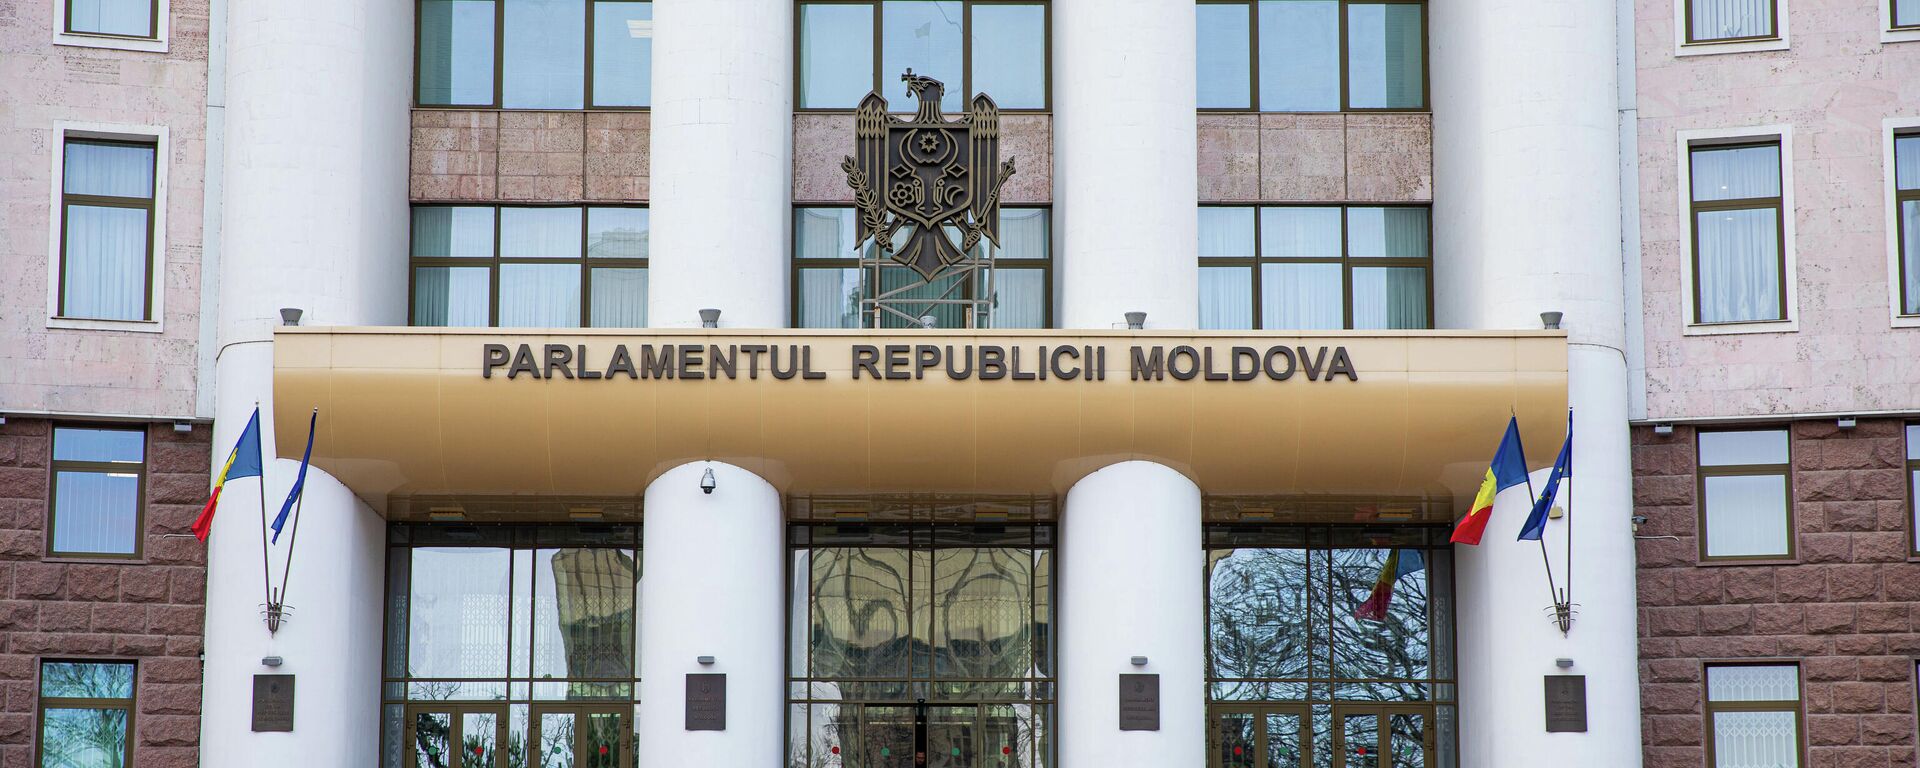 Парламент Республики Молдова  - Sputnik Moldova, 1920, 05.12.2021